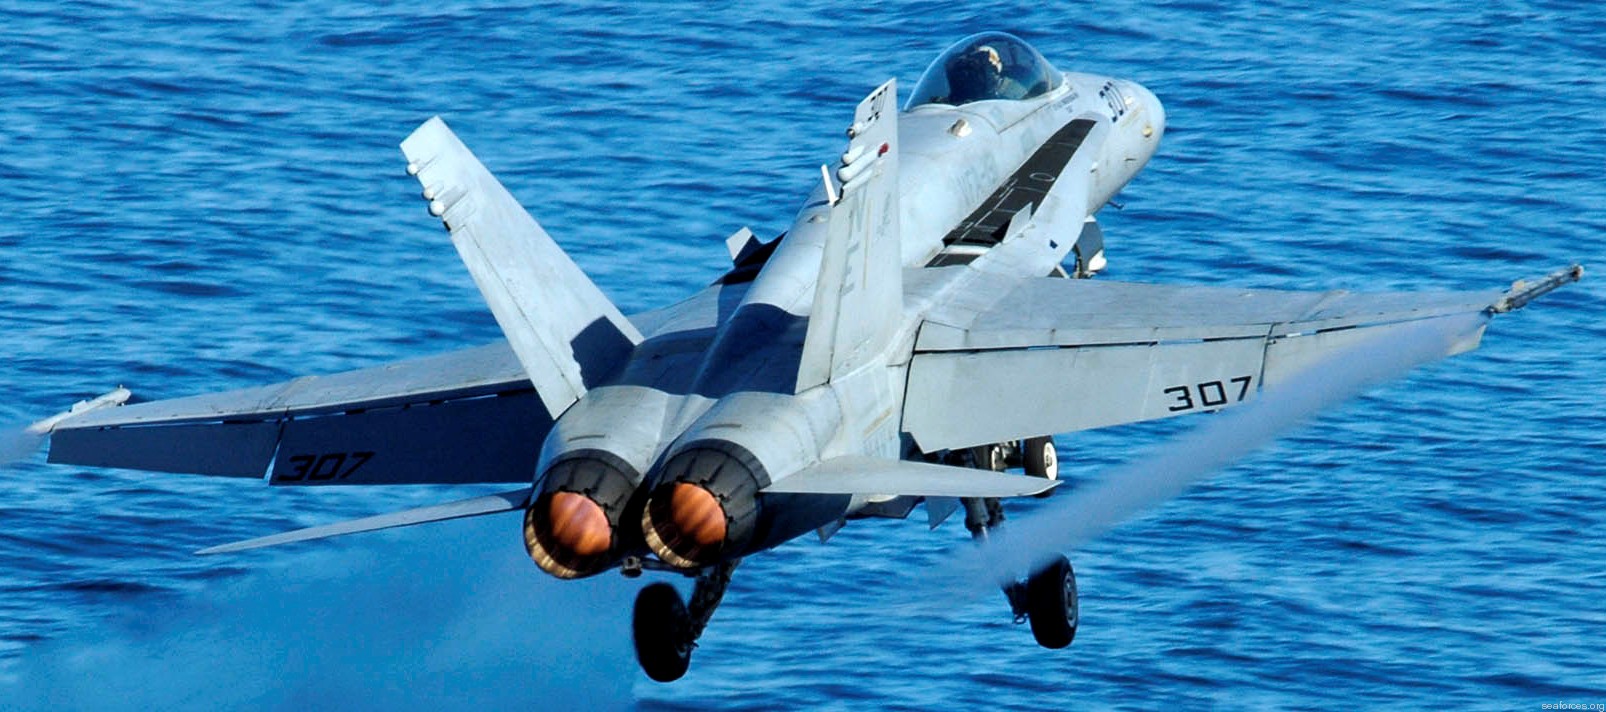 vfa-151 vigilantes strike fighter squadron navy f/a-18c hornet carrier air wing cvw-2 uss abraham lincoln cvn-72 59